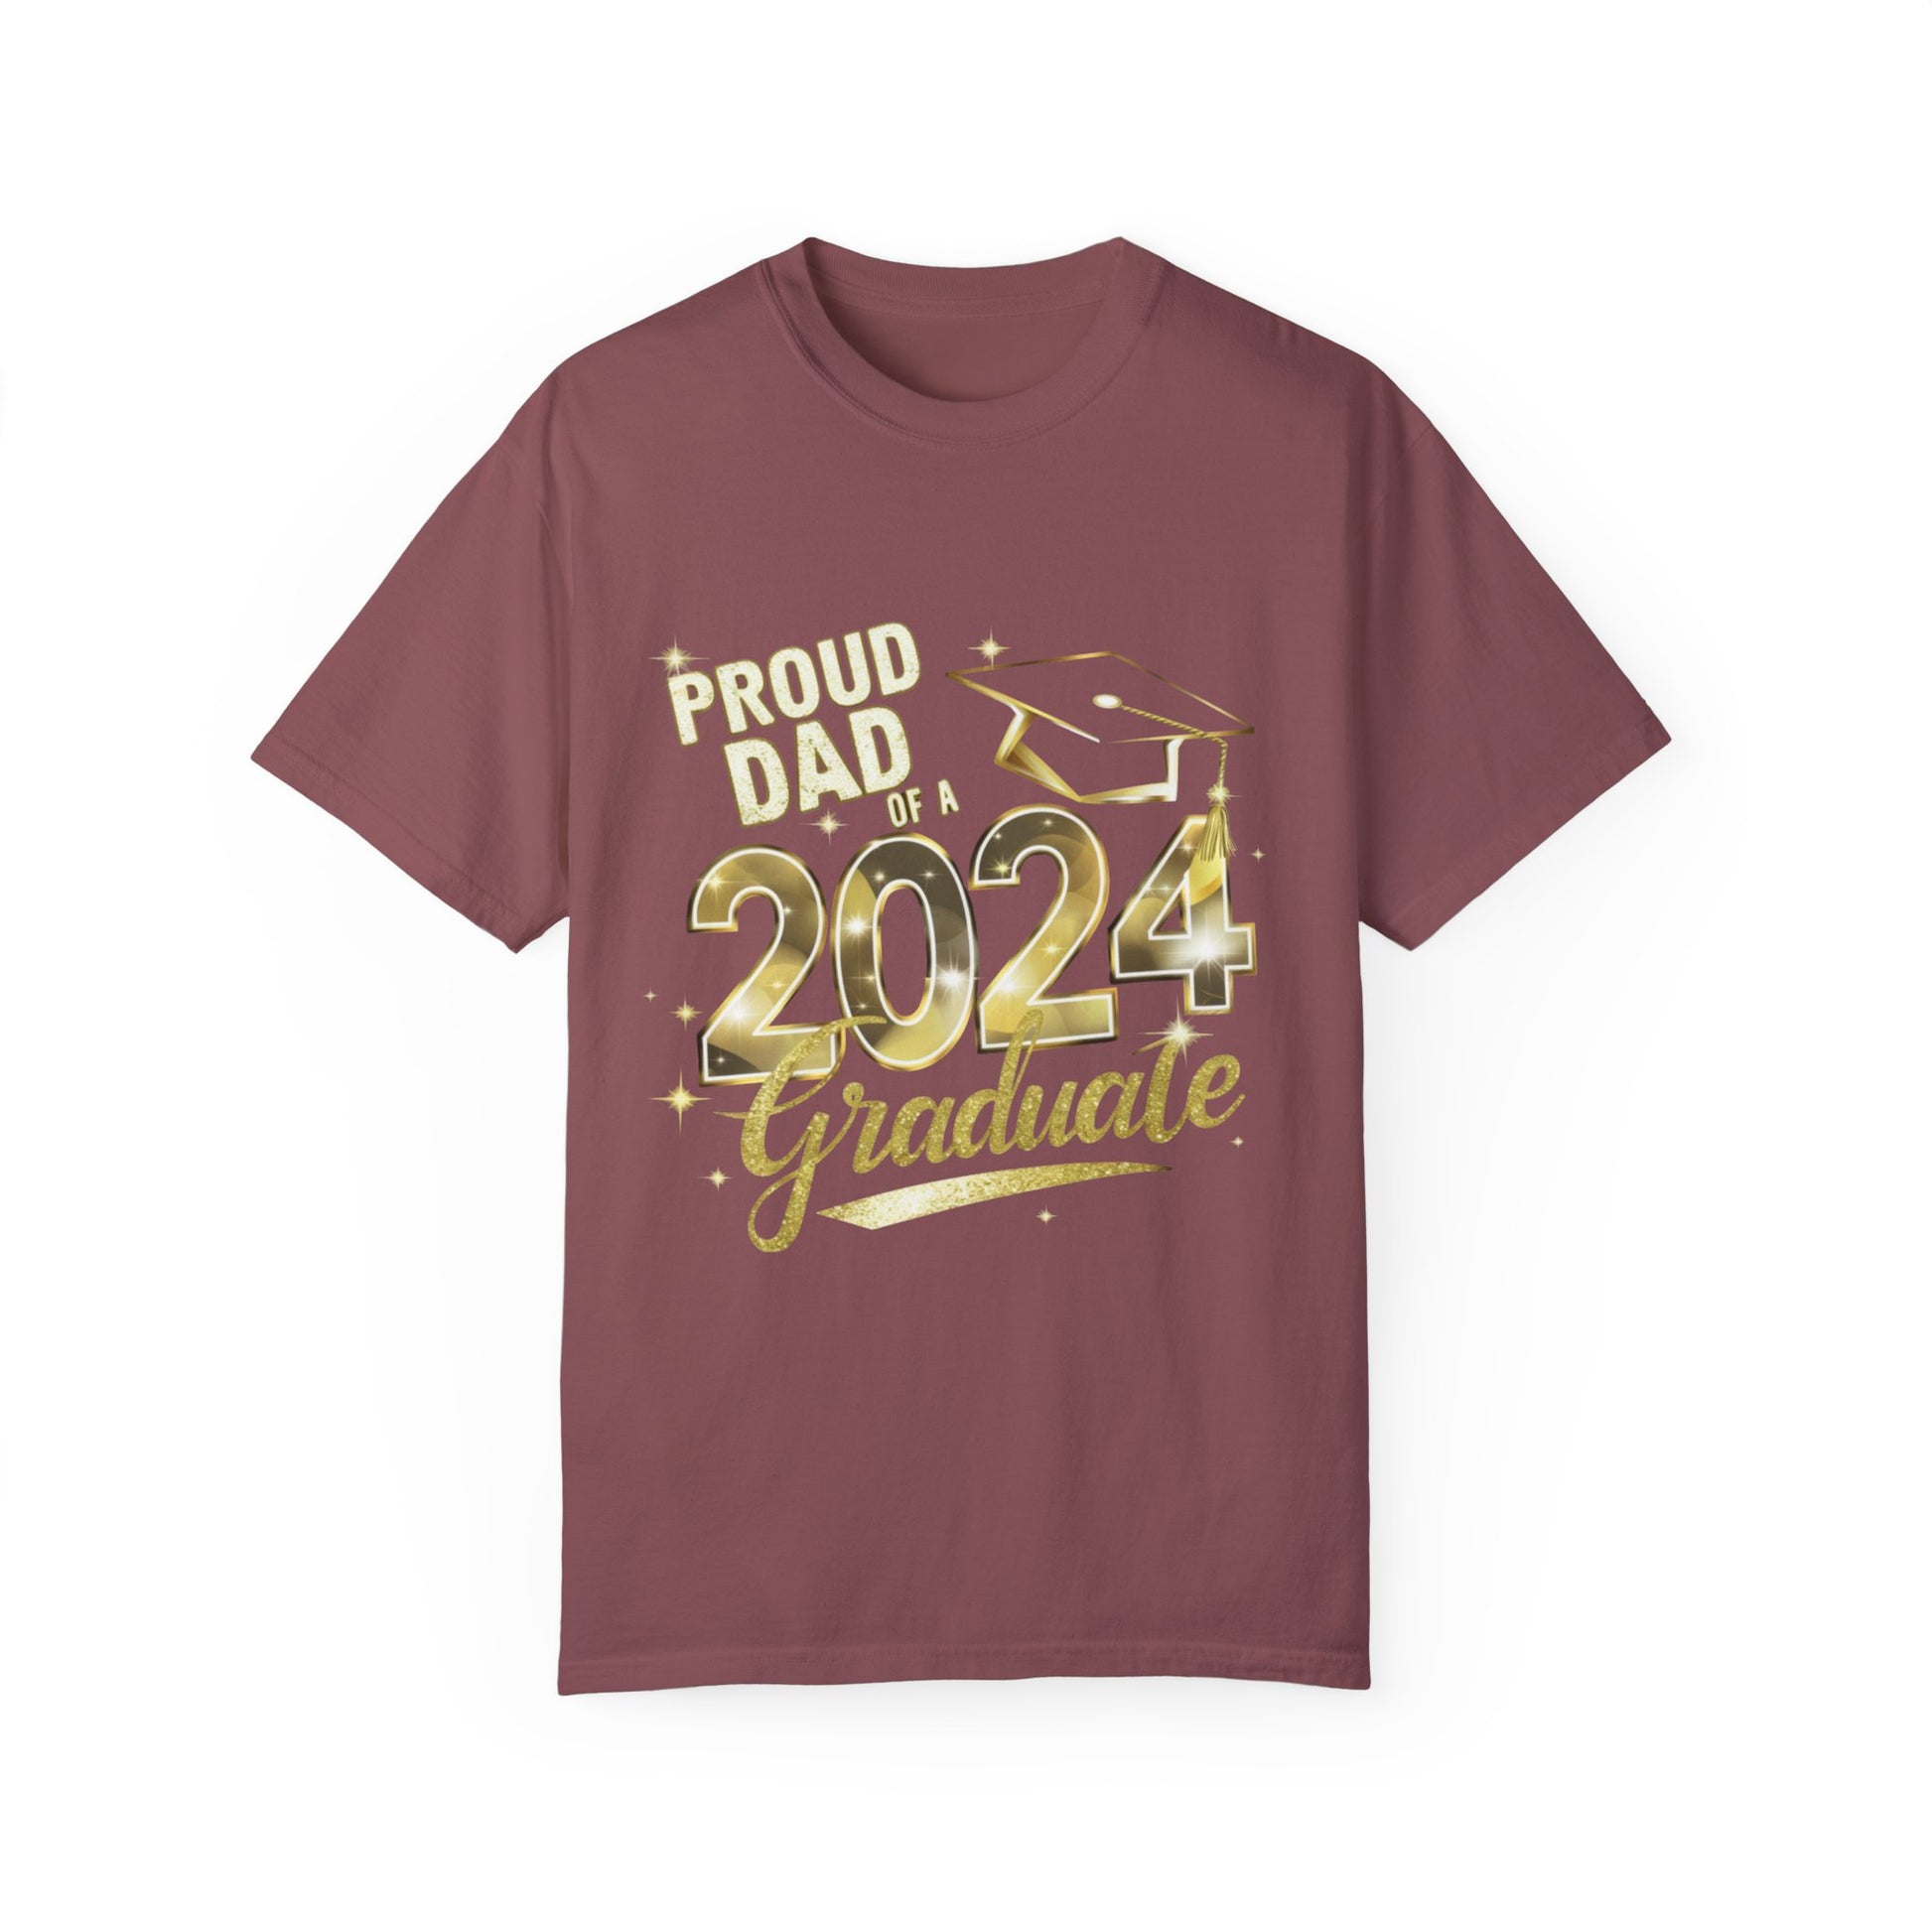 Proud of Dad 2024 Graduate Unisex Garment-dyed T-shirt Cotton Funny Humorous Graphic Soft Premium Unisex Men Women Brick T-shirt Birthday Gift-5